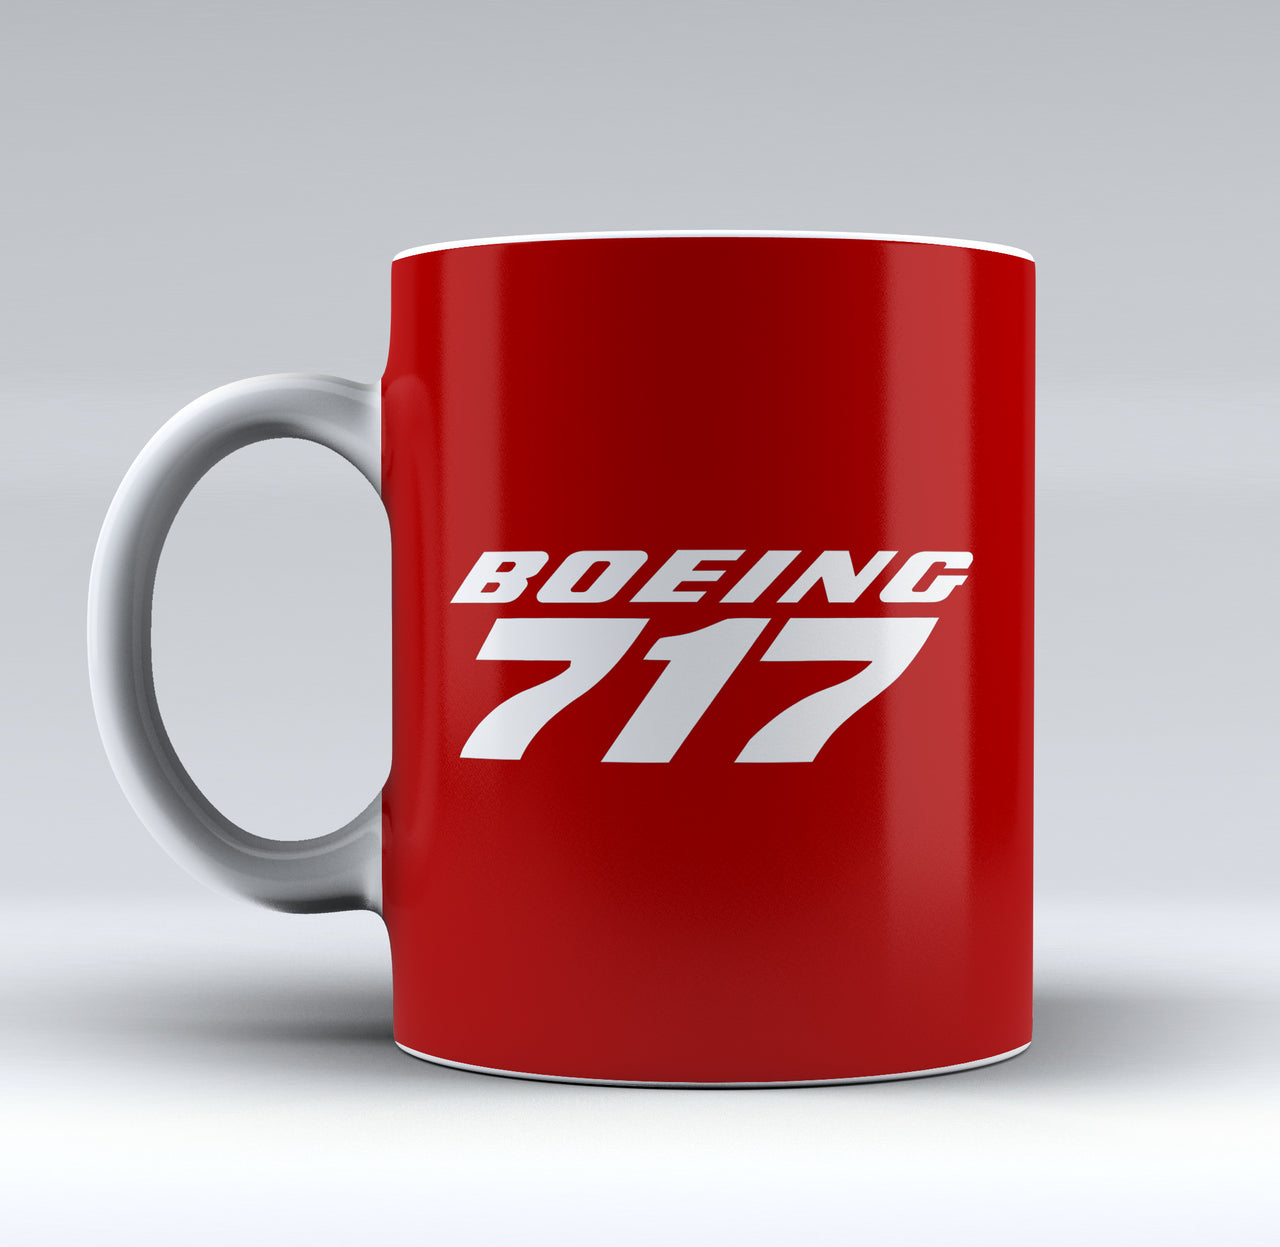 Boeing 717 & Text Designed Mugs